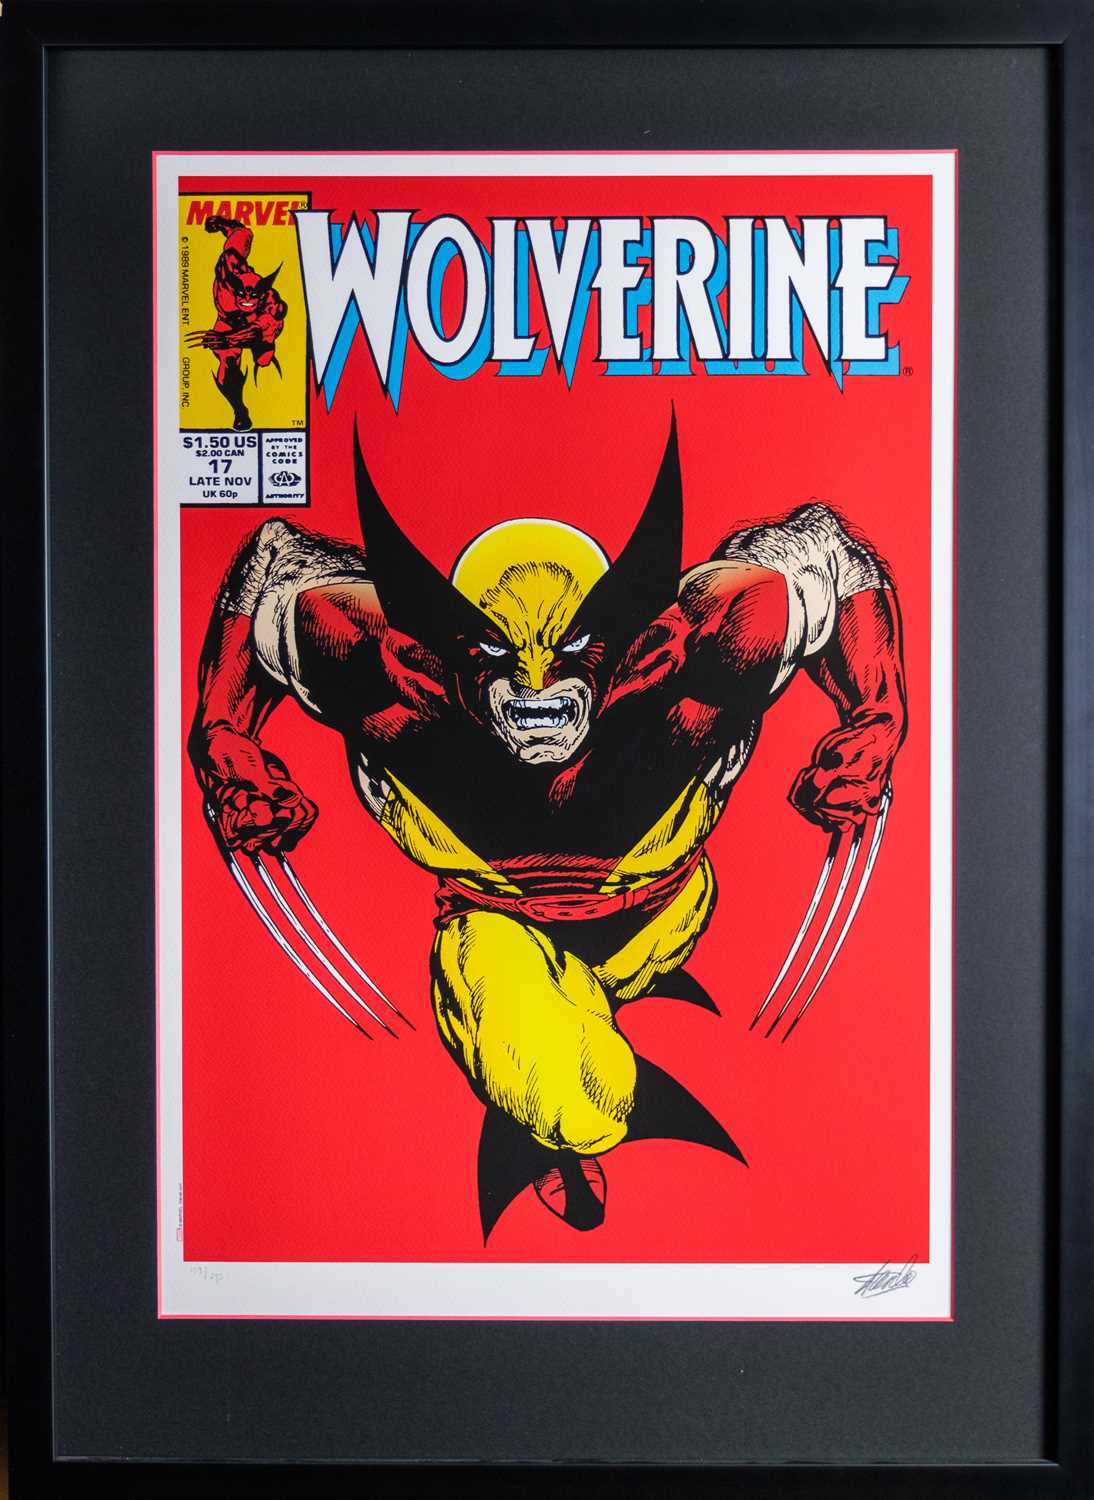 (Signed) Stan LEE (1922-2018) Wolverine #17 (2015) - Image 2 of 5